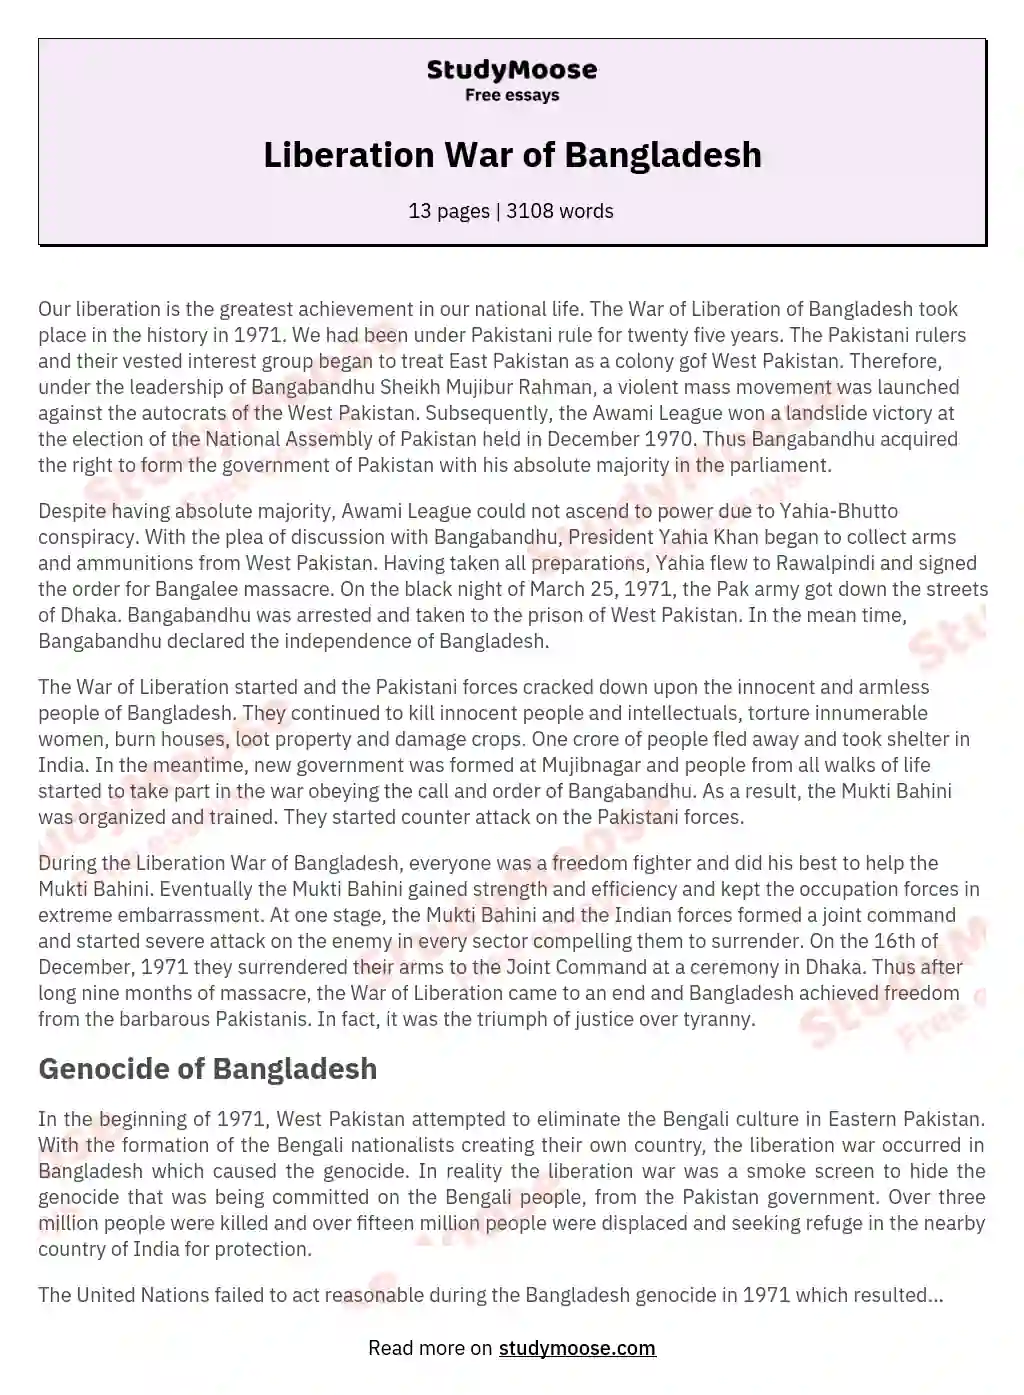 Liberation War of Bangladesh essay